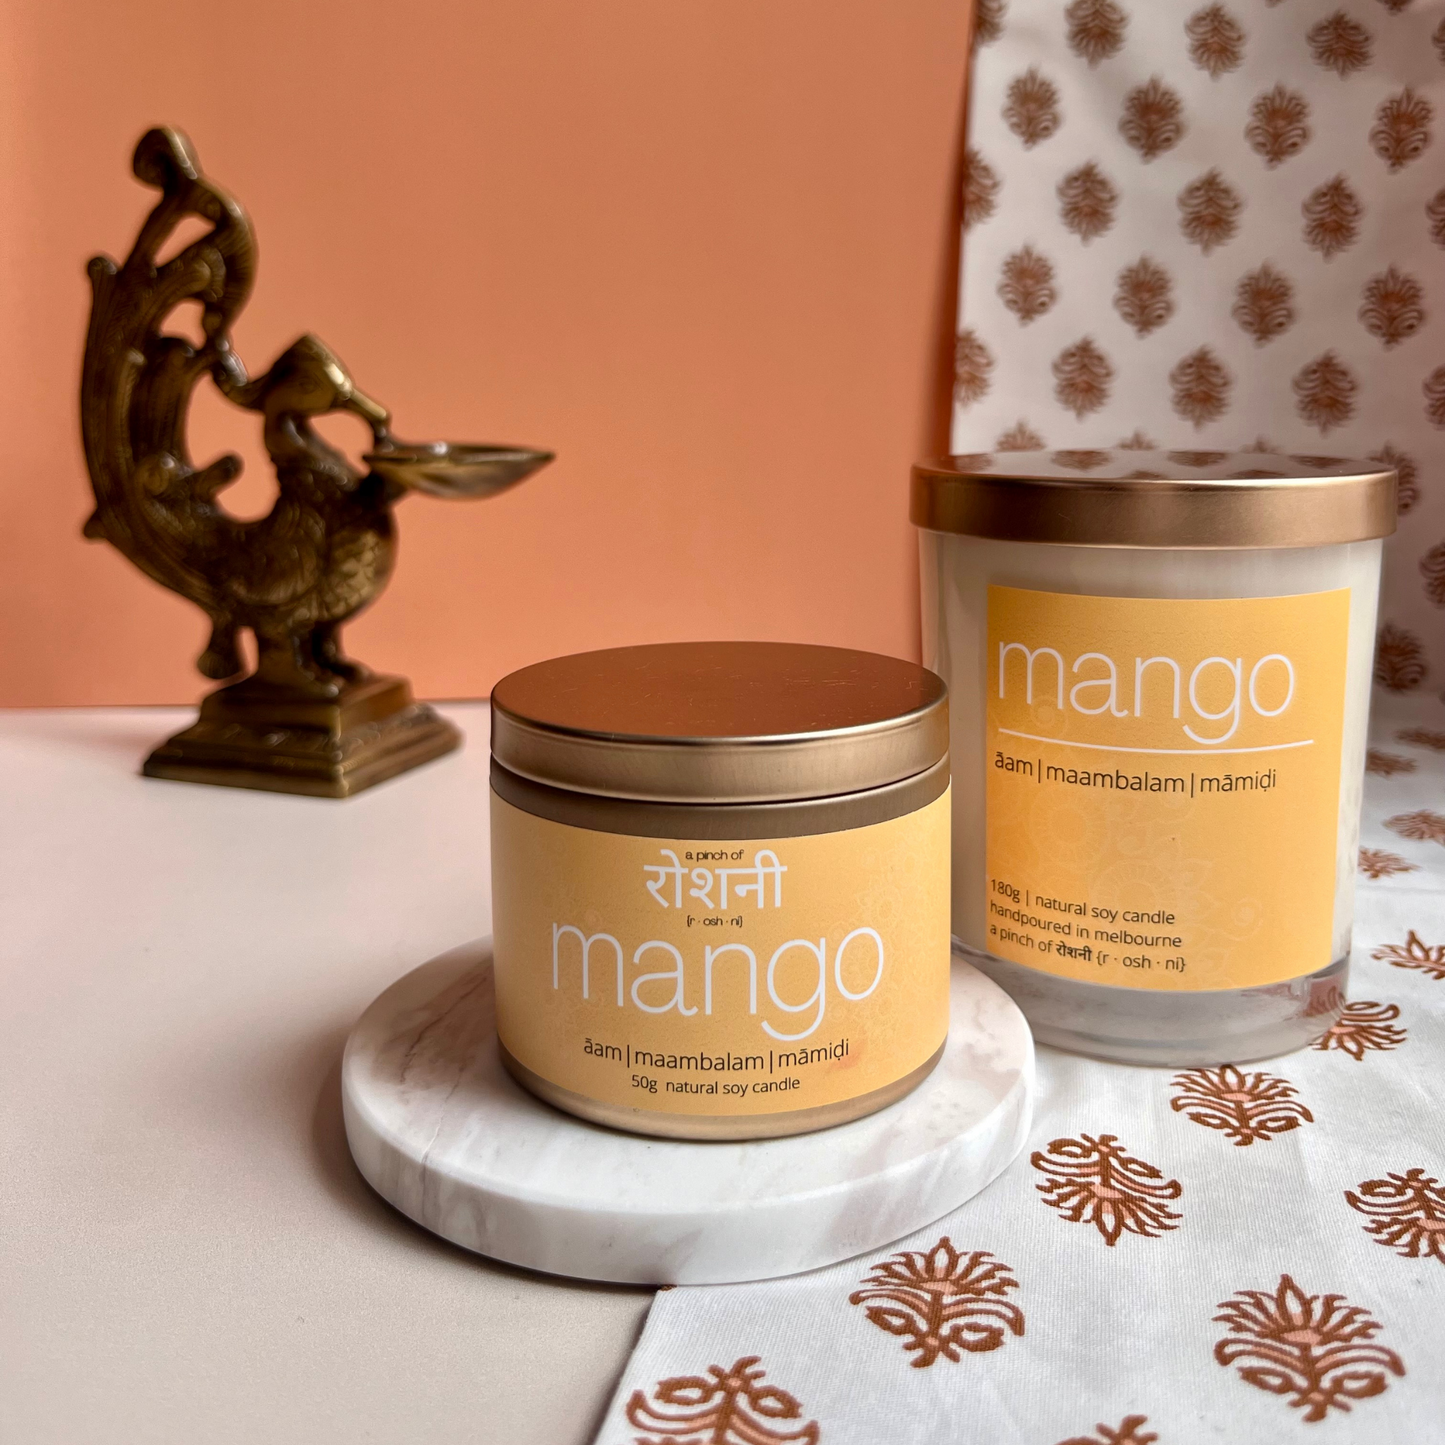 Mango (gold tin)